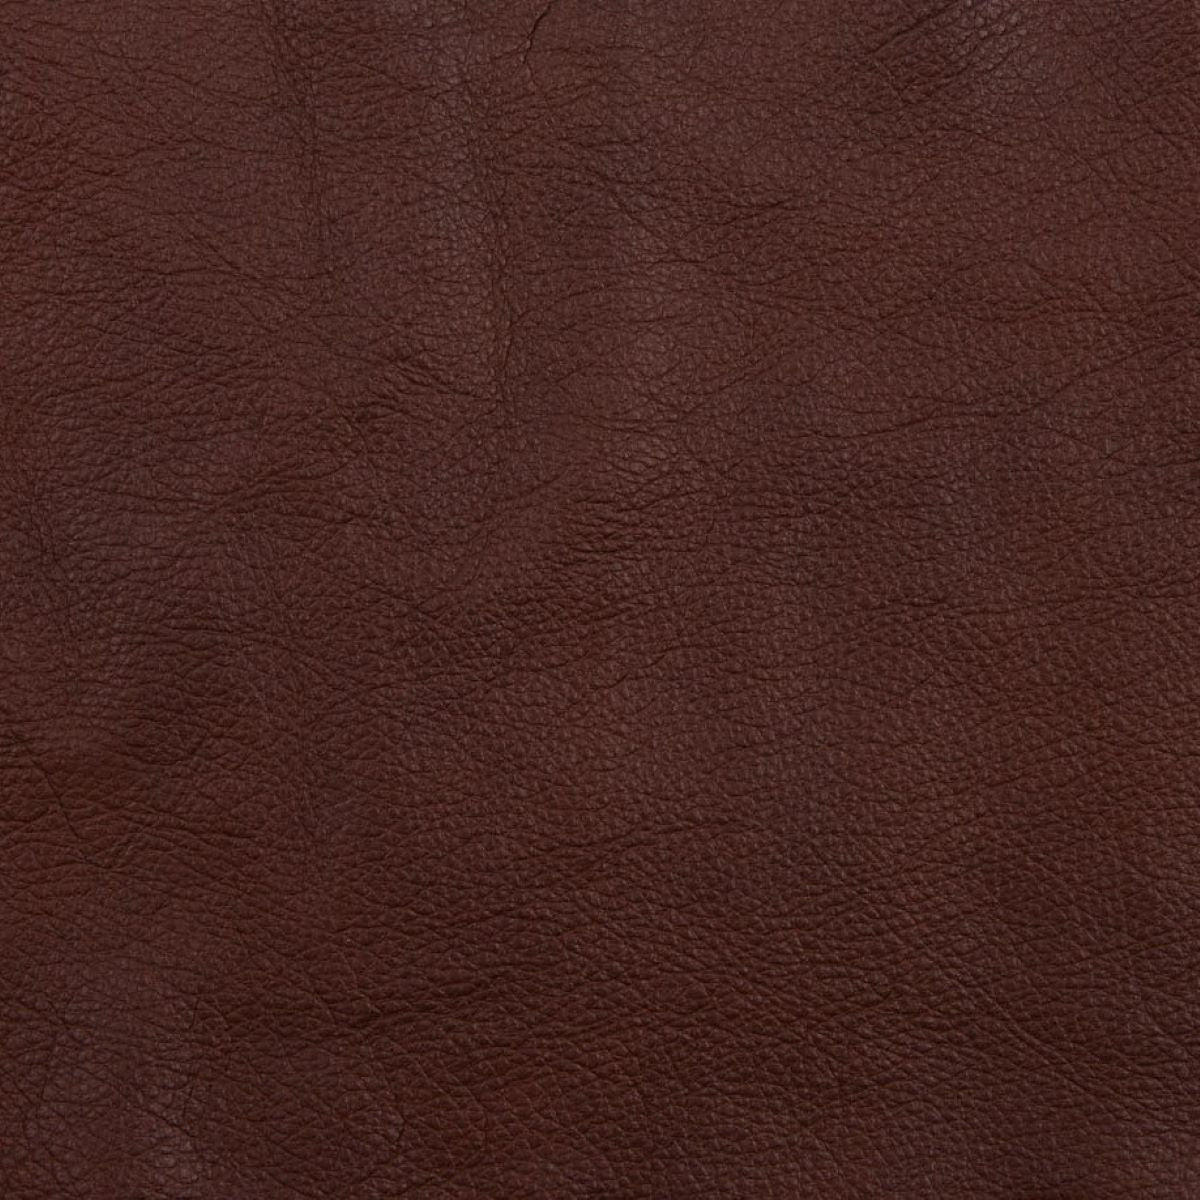 Pecan-Heartland Leather